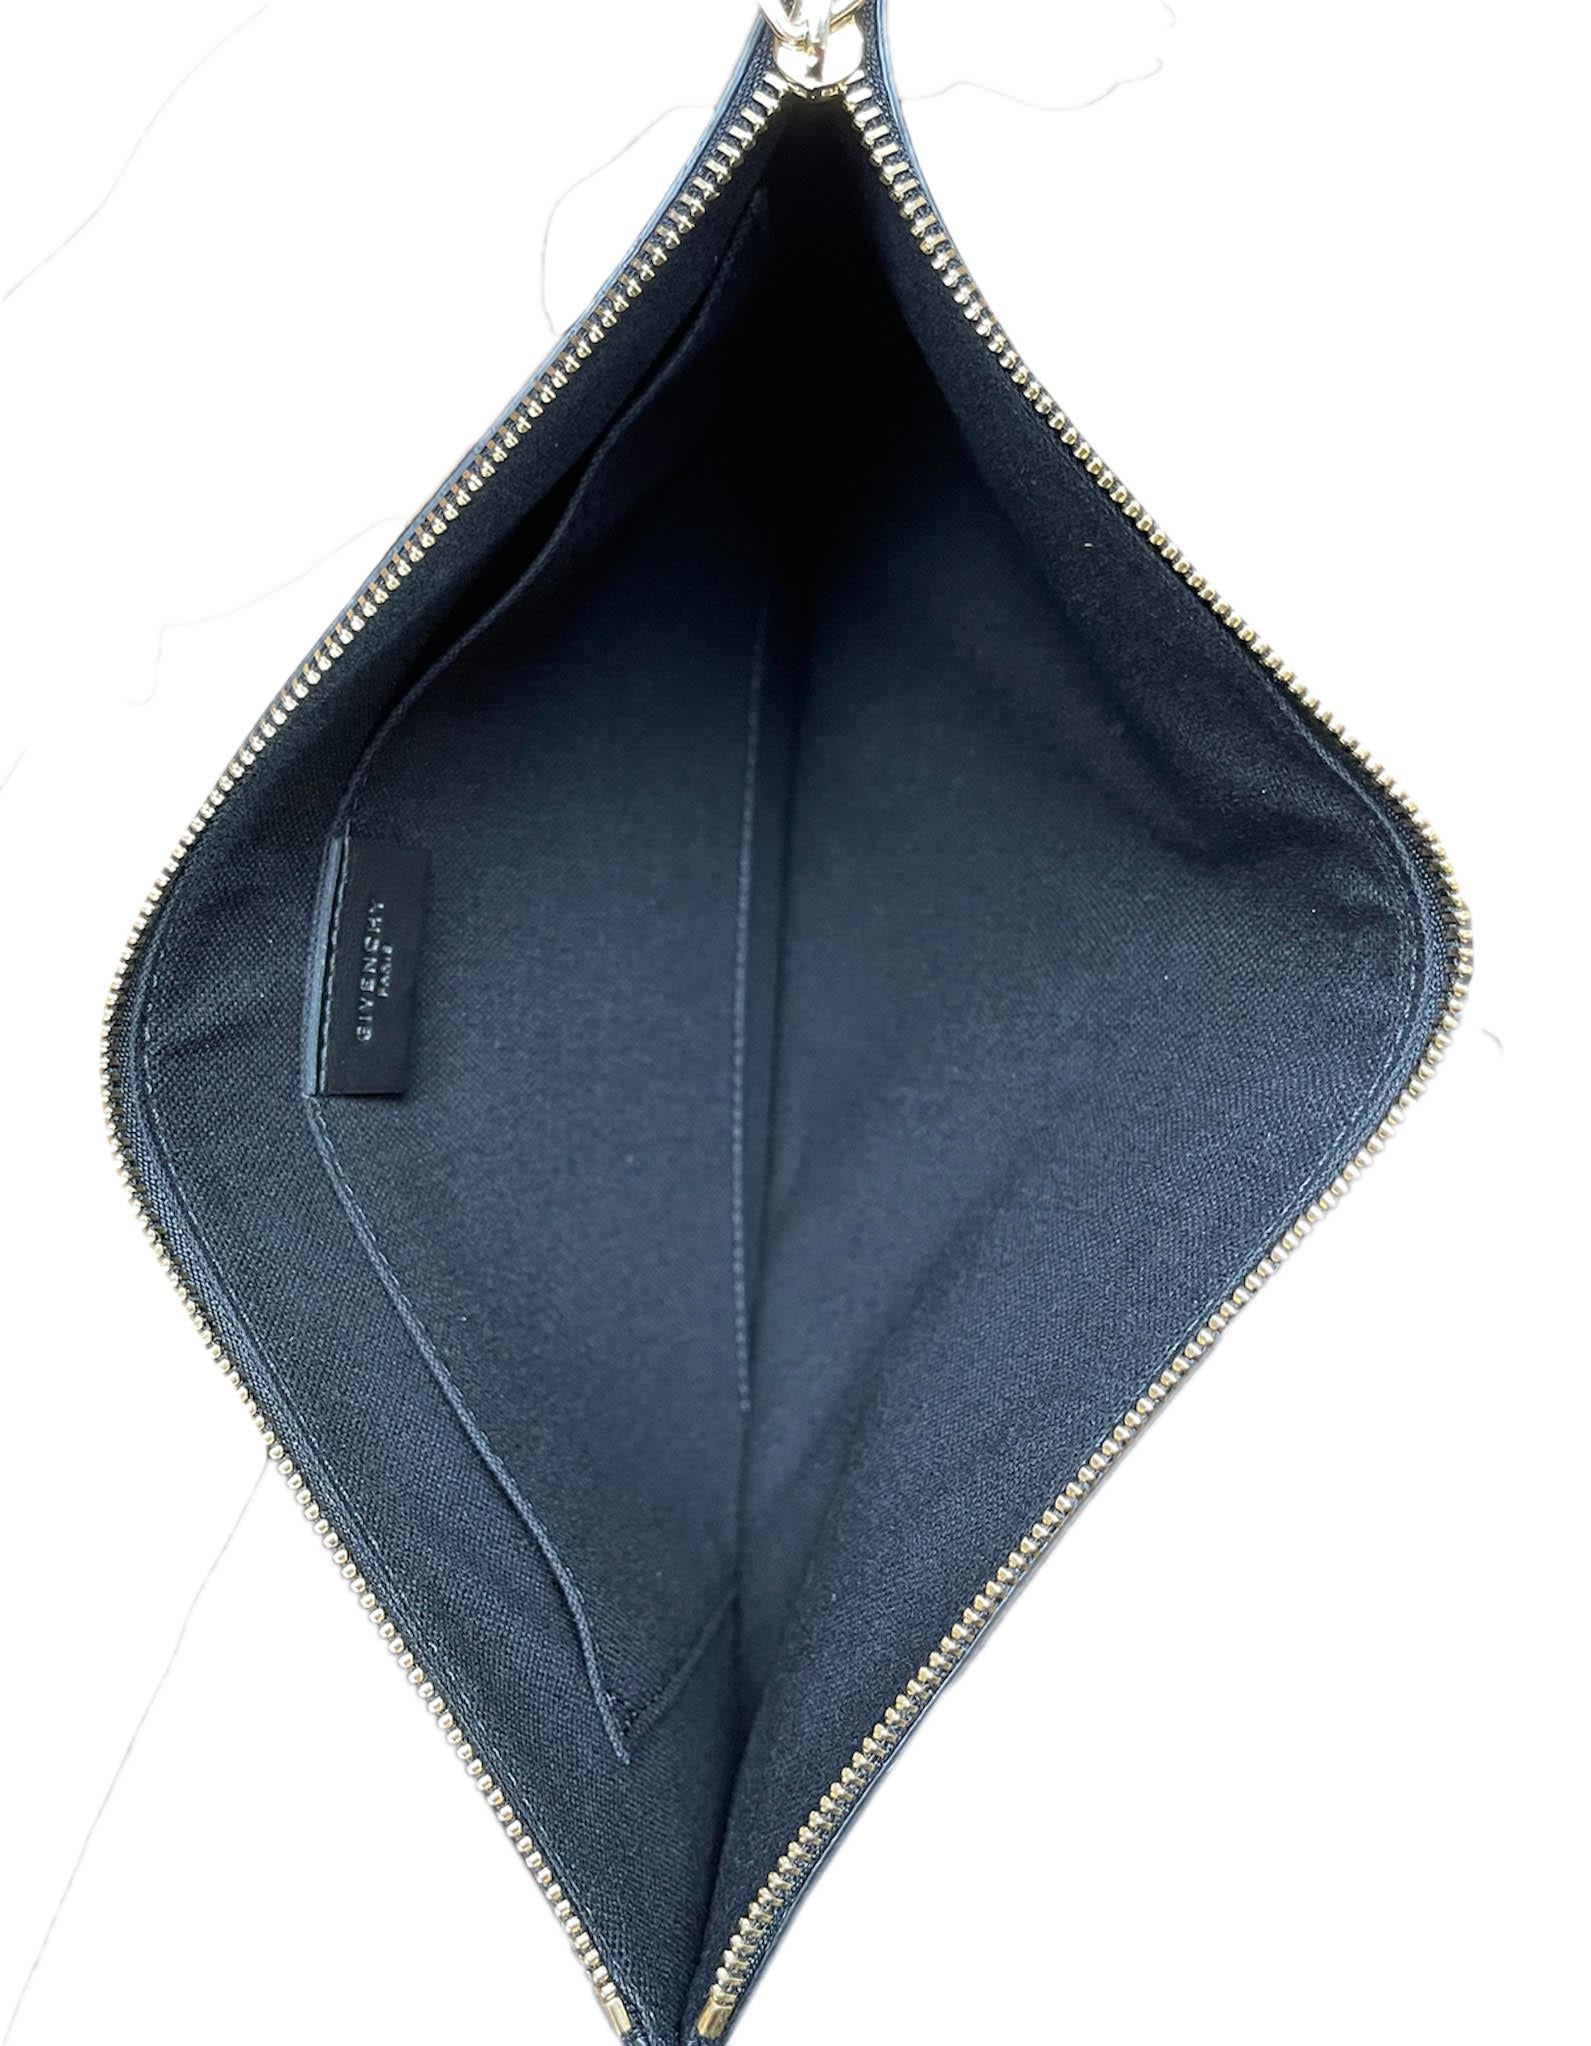 Women's or Men's Givenchy Black Logo Floral Print Large Pouch Clutch Bag